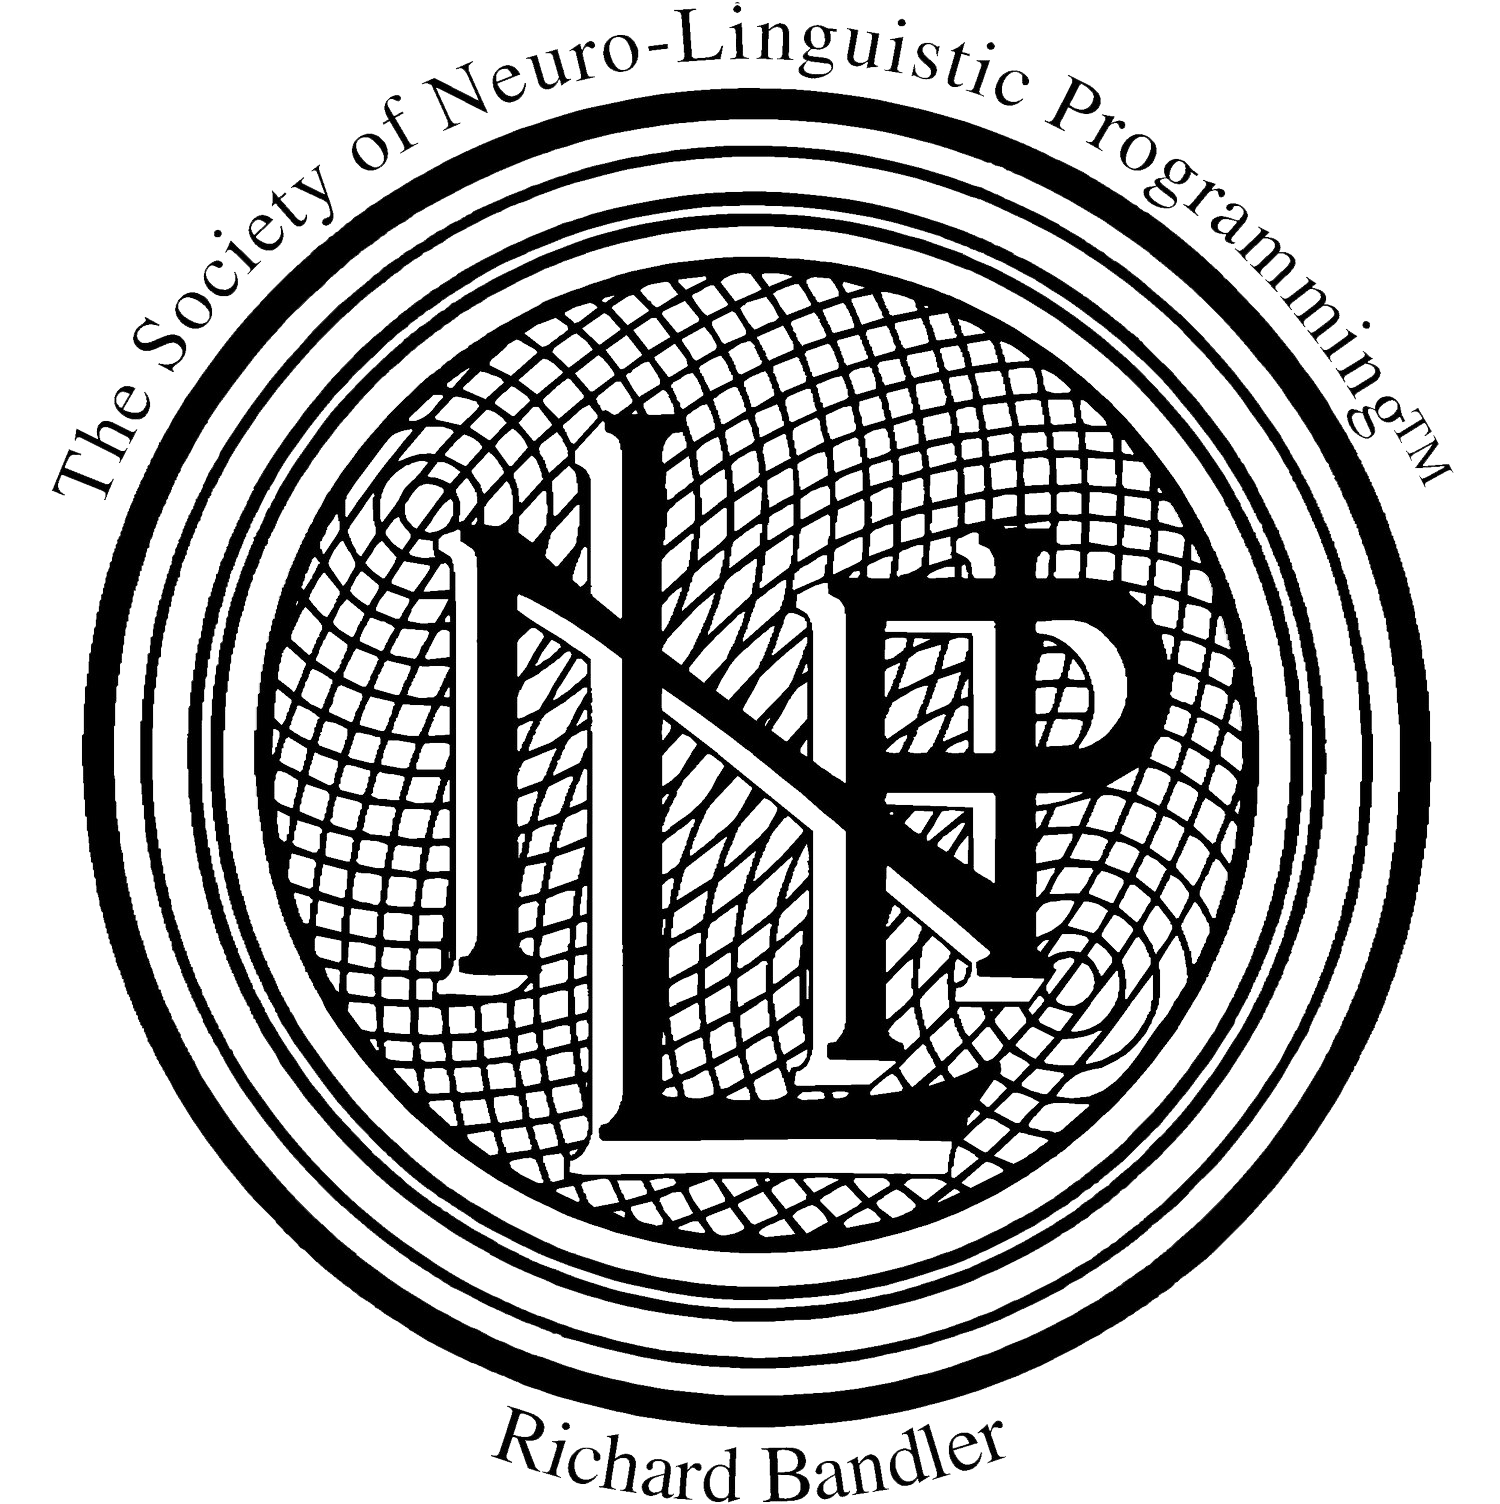 The Society of Neuro-Linguistic Programming (NLP) Richard Bandler logo